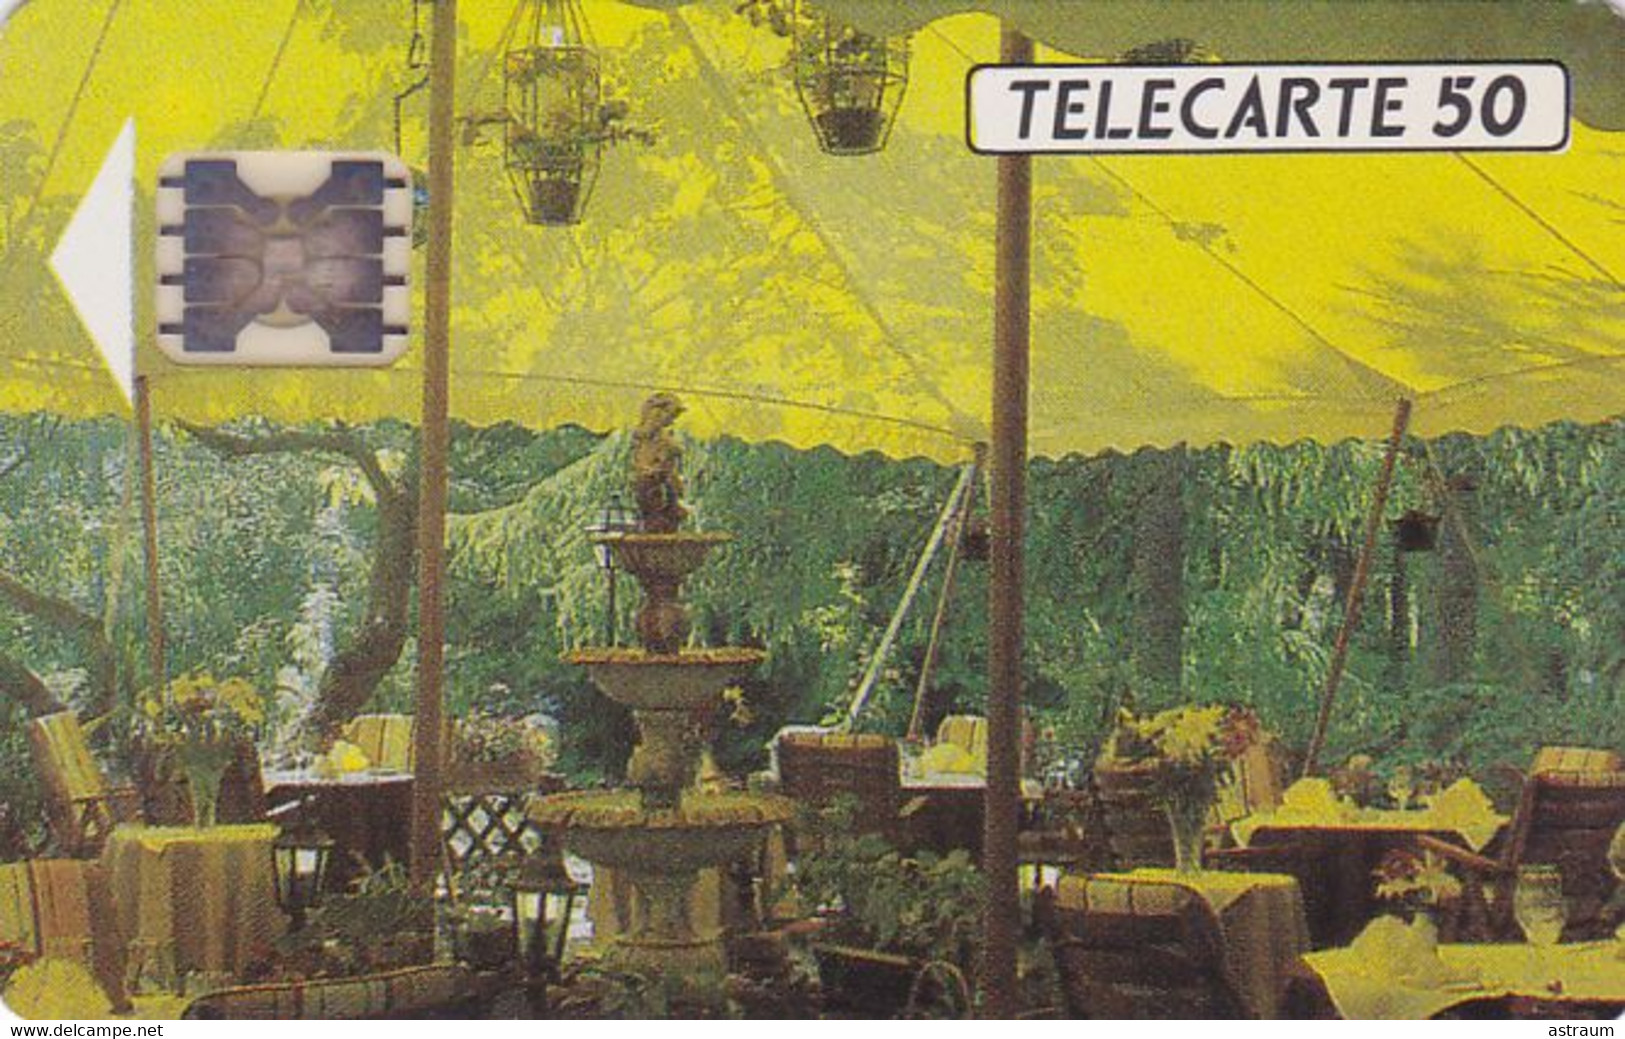 Telecarte Privée - D212 -- Relais - SC5ab - 1000 Ex  - 50 Un - 1989 - Telefoonkaarten Voor Particulieren